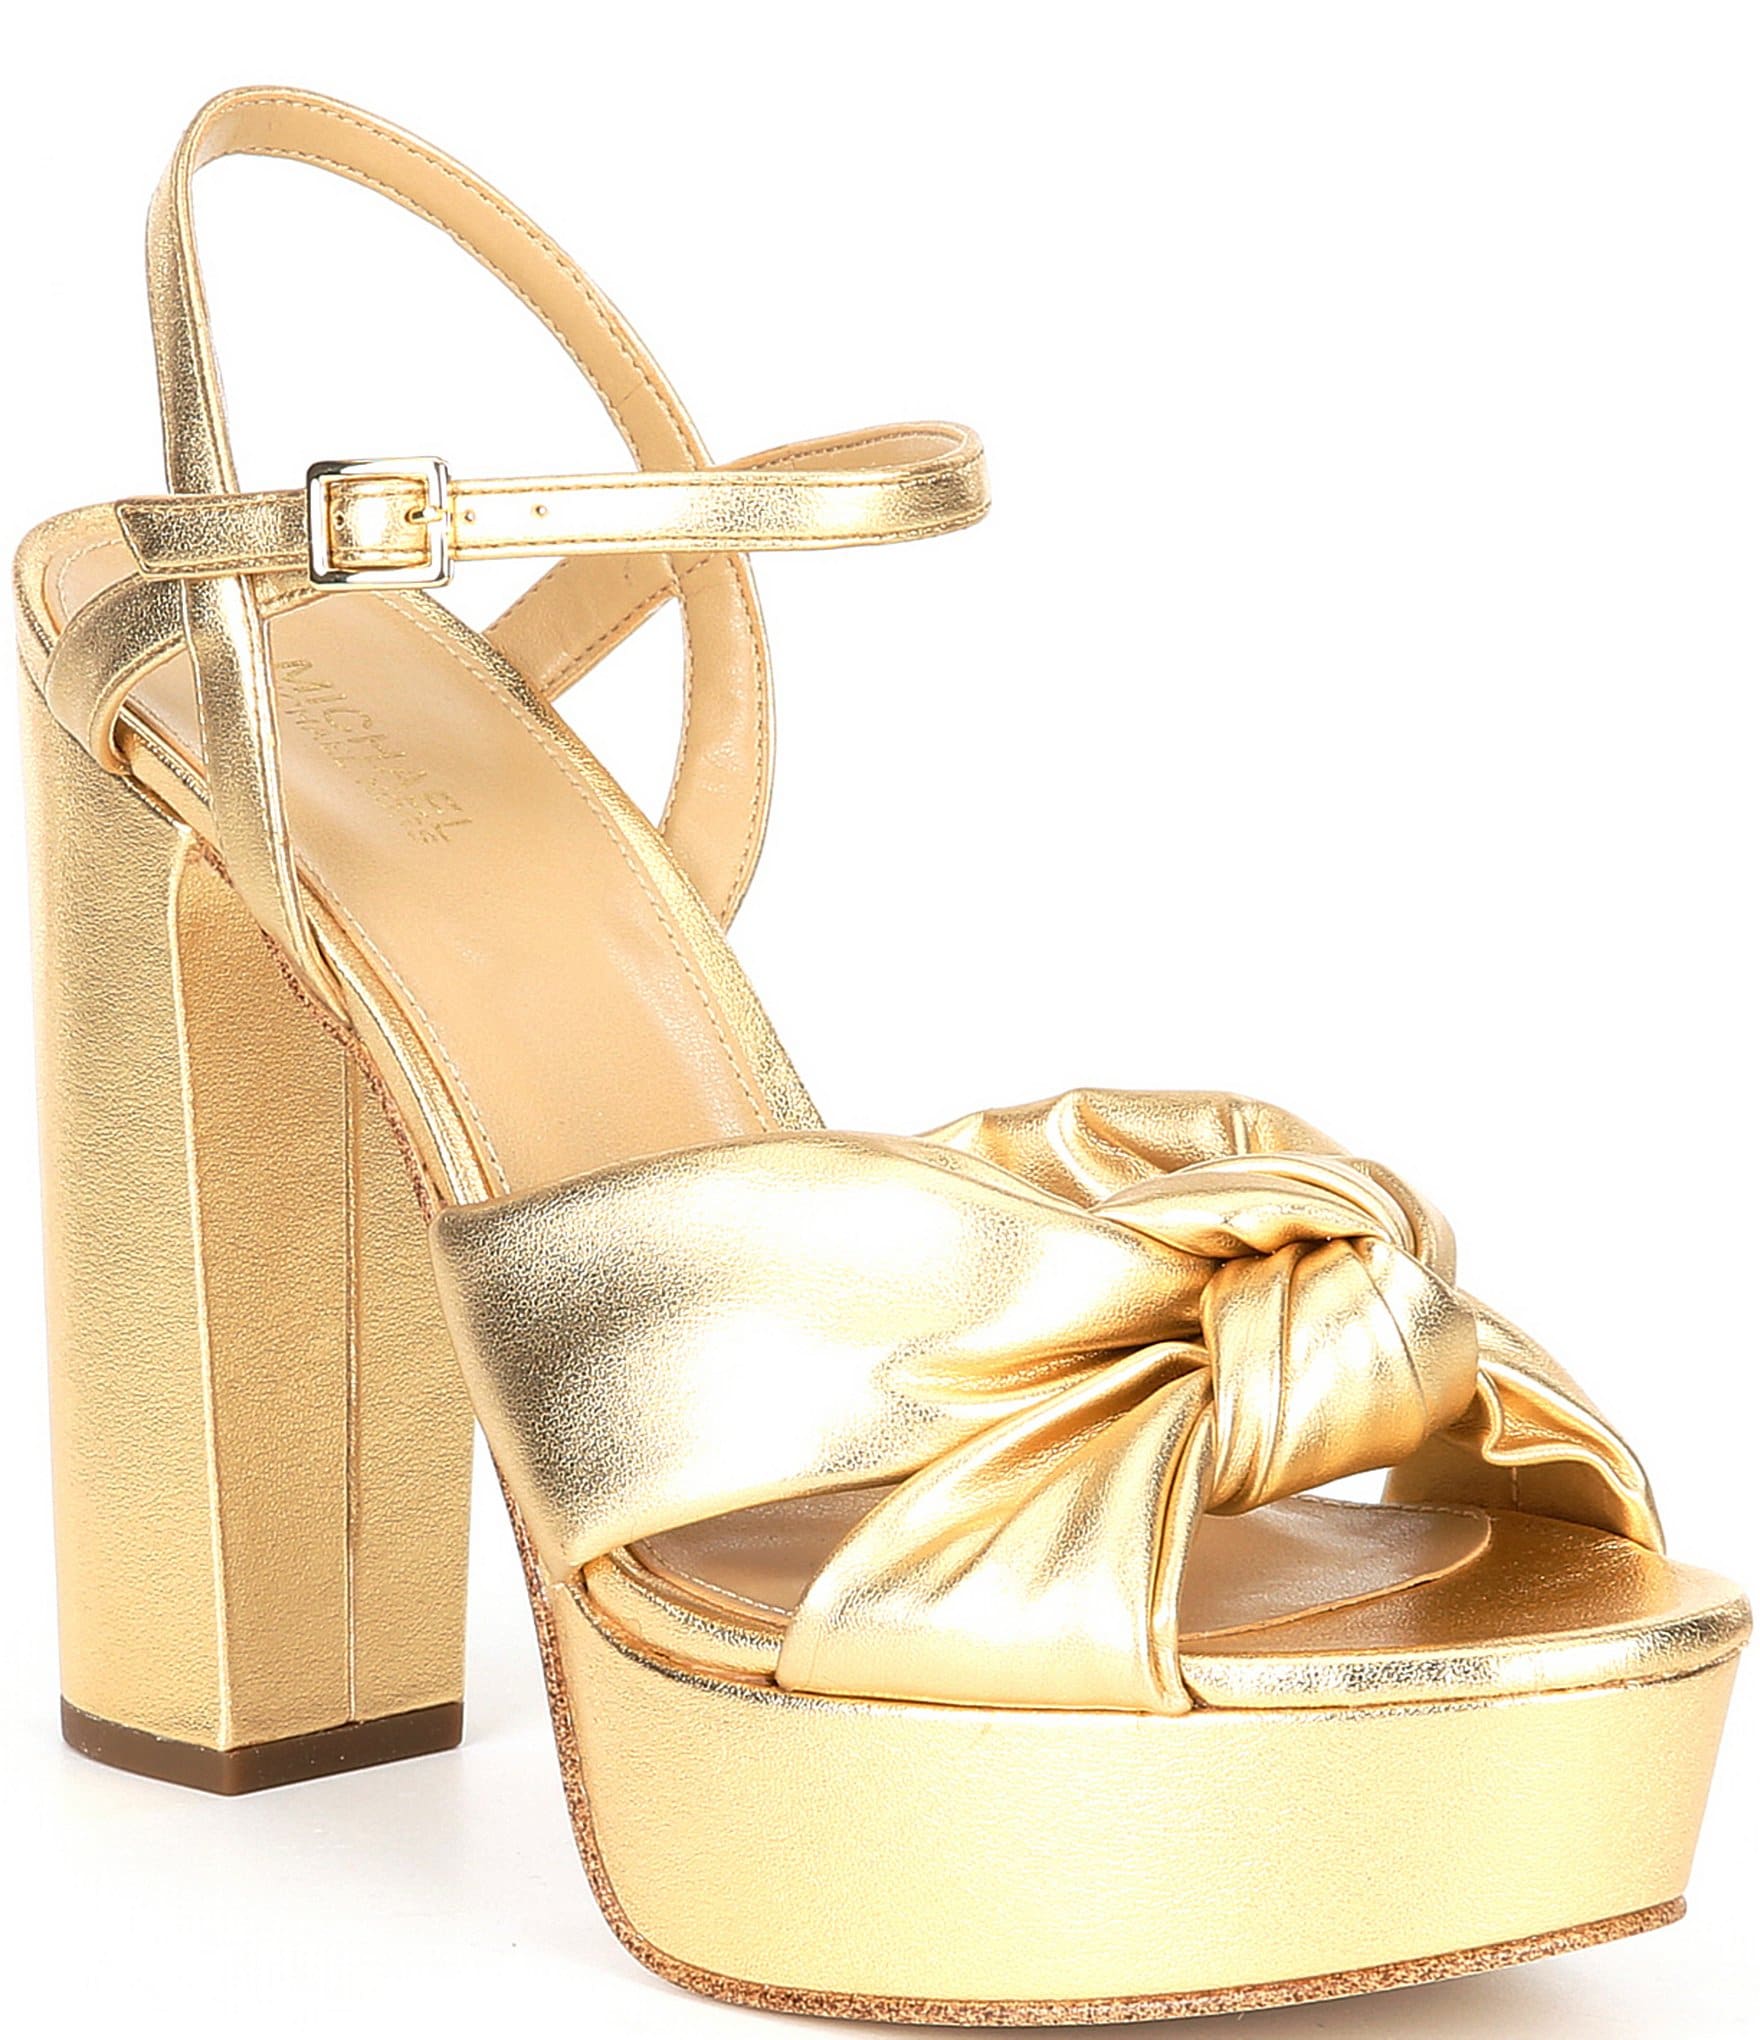 New Michael Kors Sandals Pale Gold Size 65  eBay